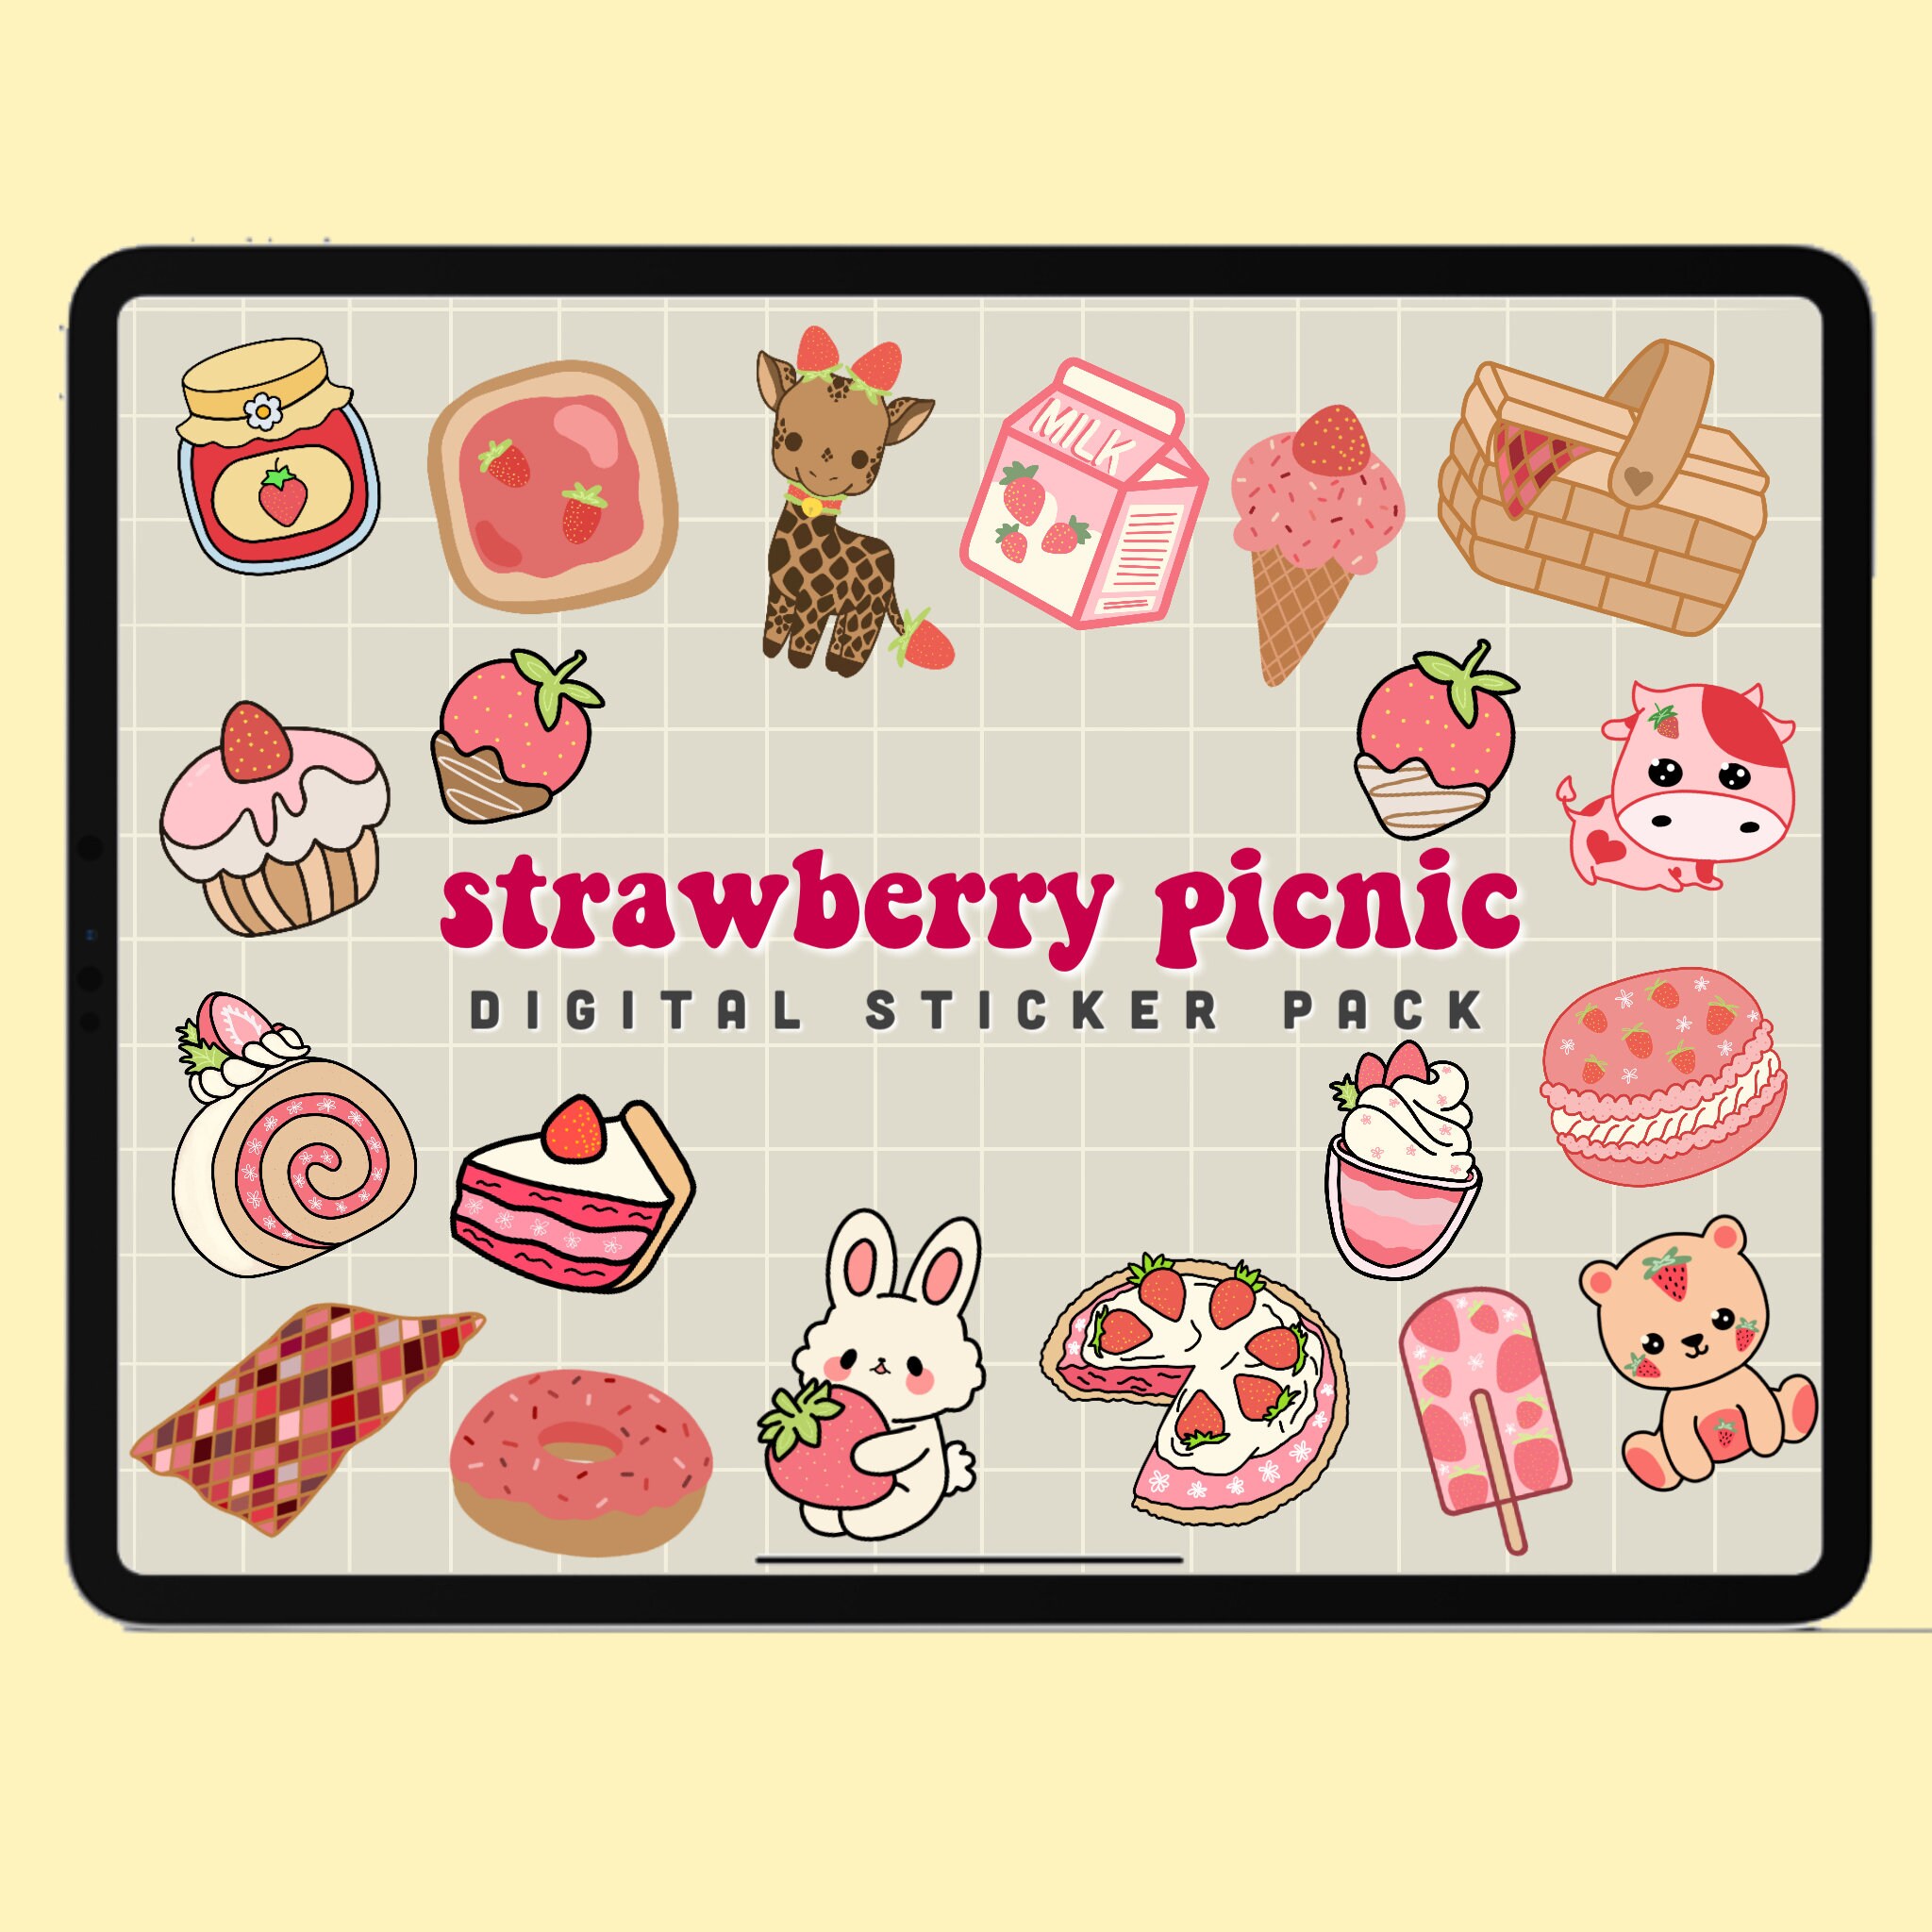 Strawberry Sticker Sheet Kawaii Stickers Cute Stationery Journal Stickers  Strawberry Stickers Cute Stickers Cute Sticker Sheet 